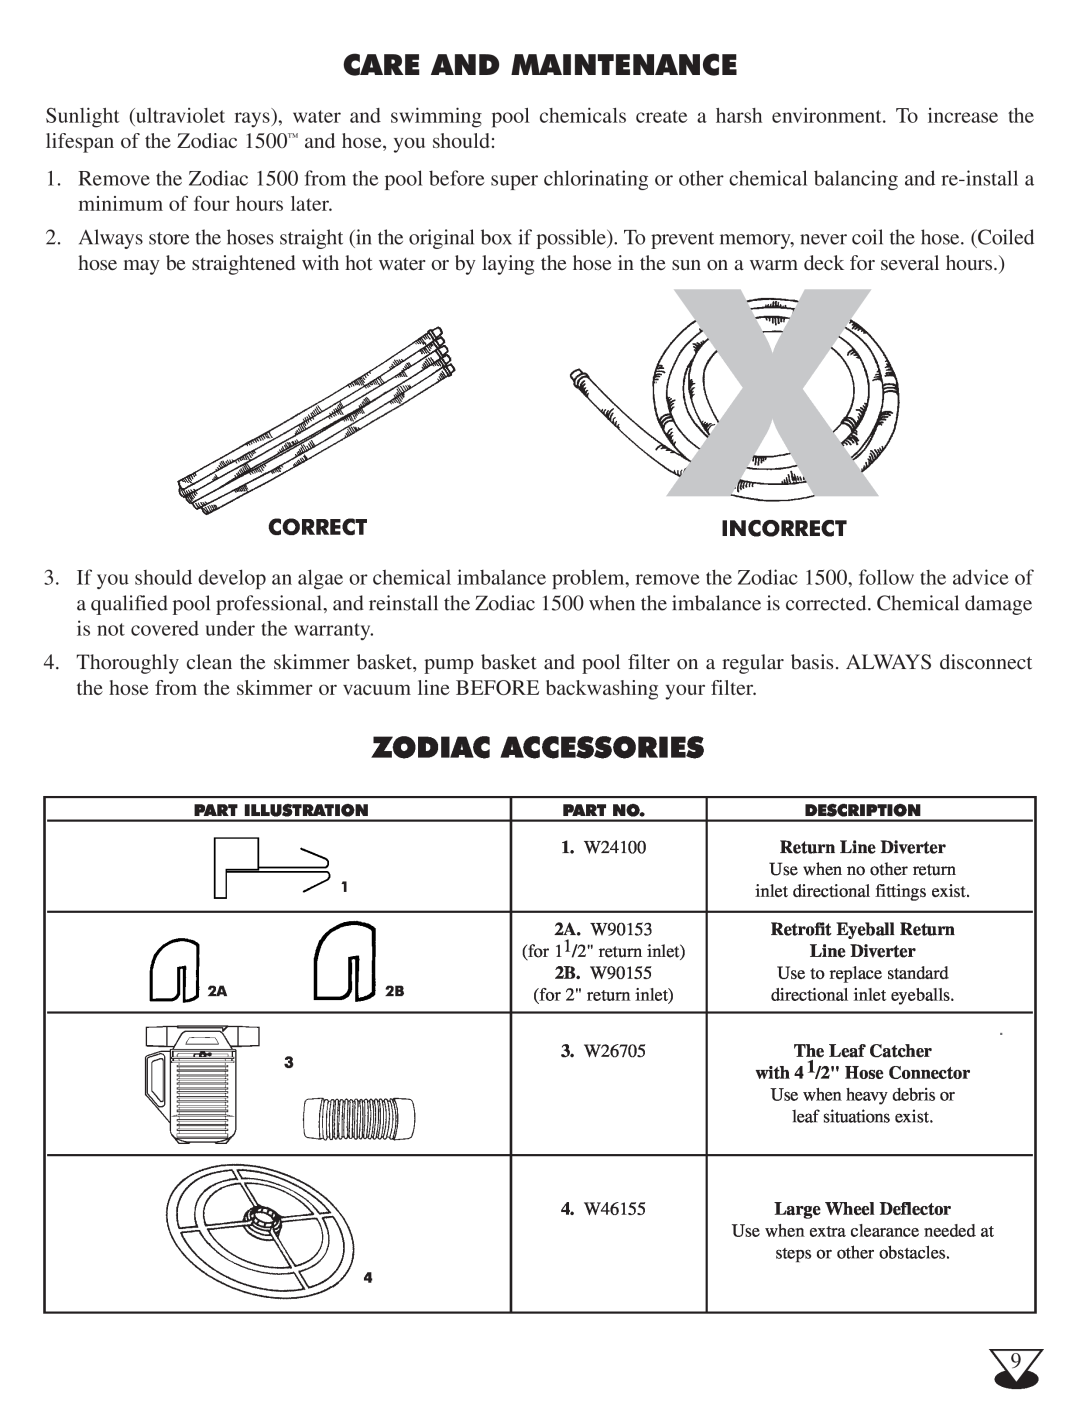 Baracoda 1500 owner manual Zodiac Accessories, Correct, Care And Maintenance, Incorrect 